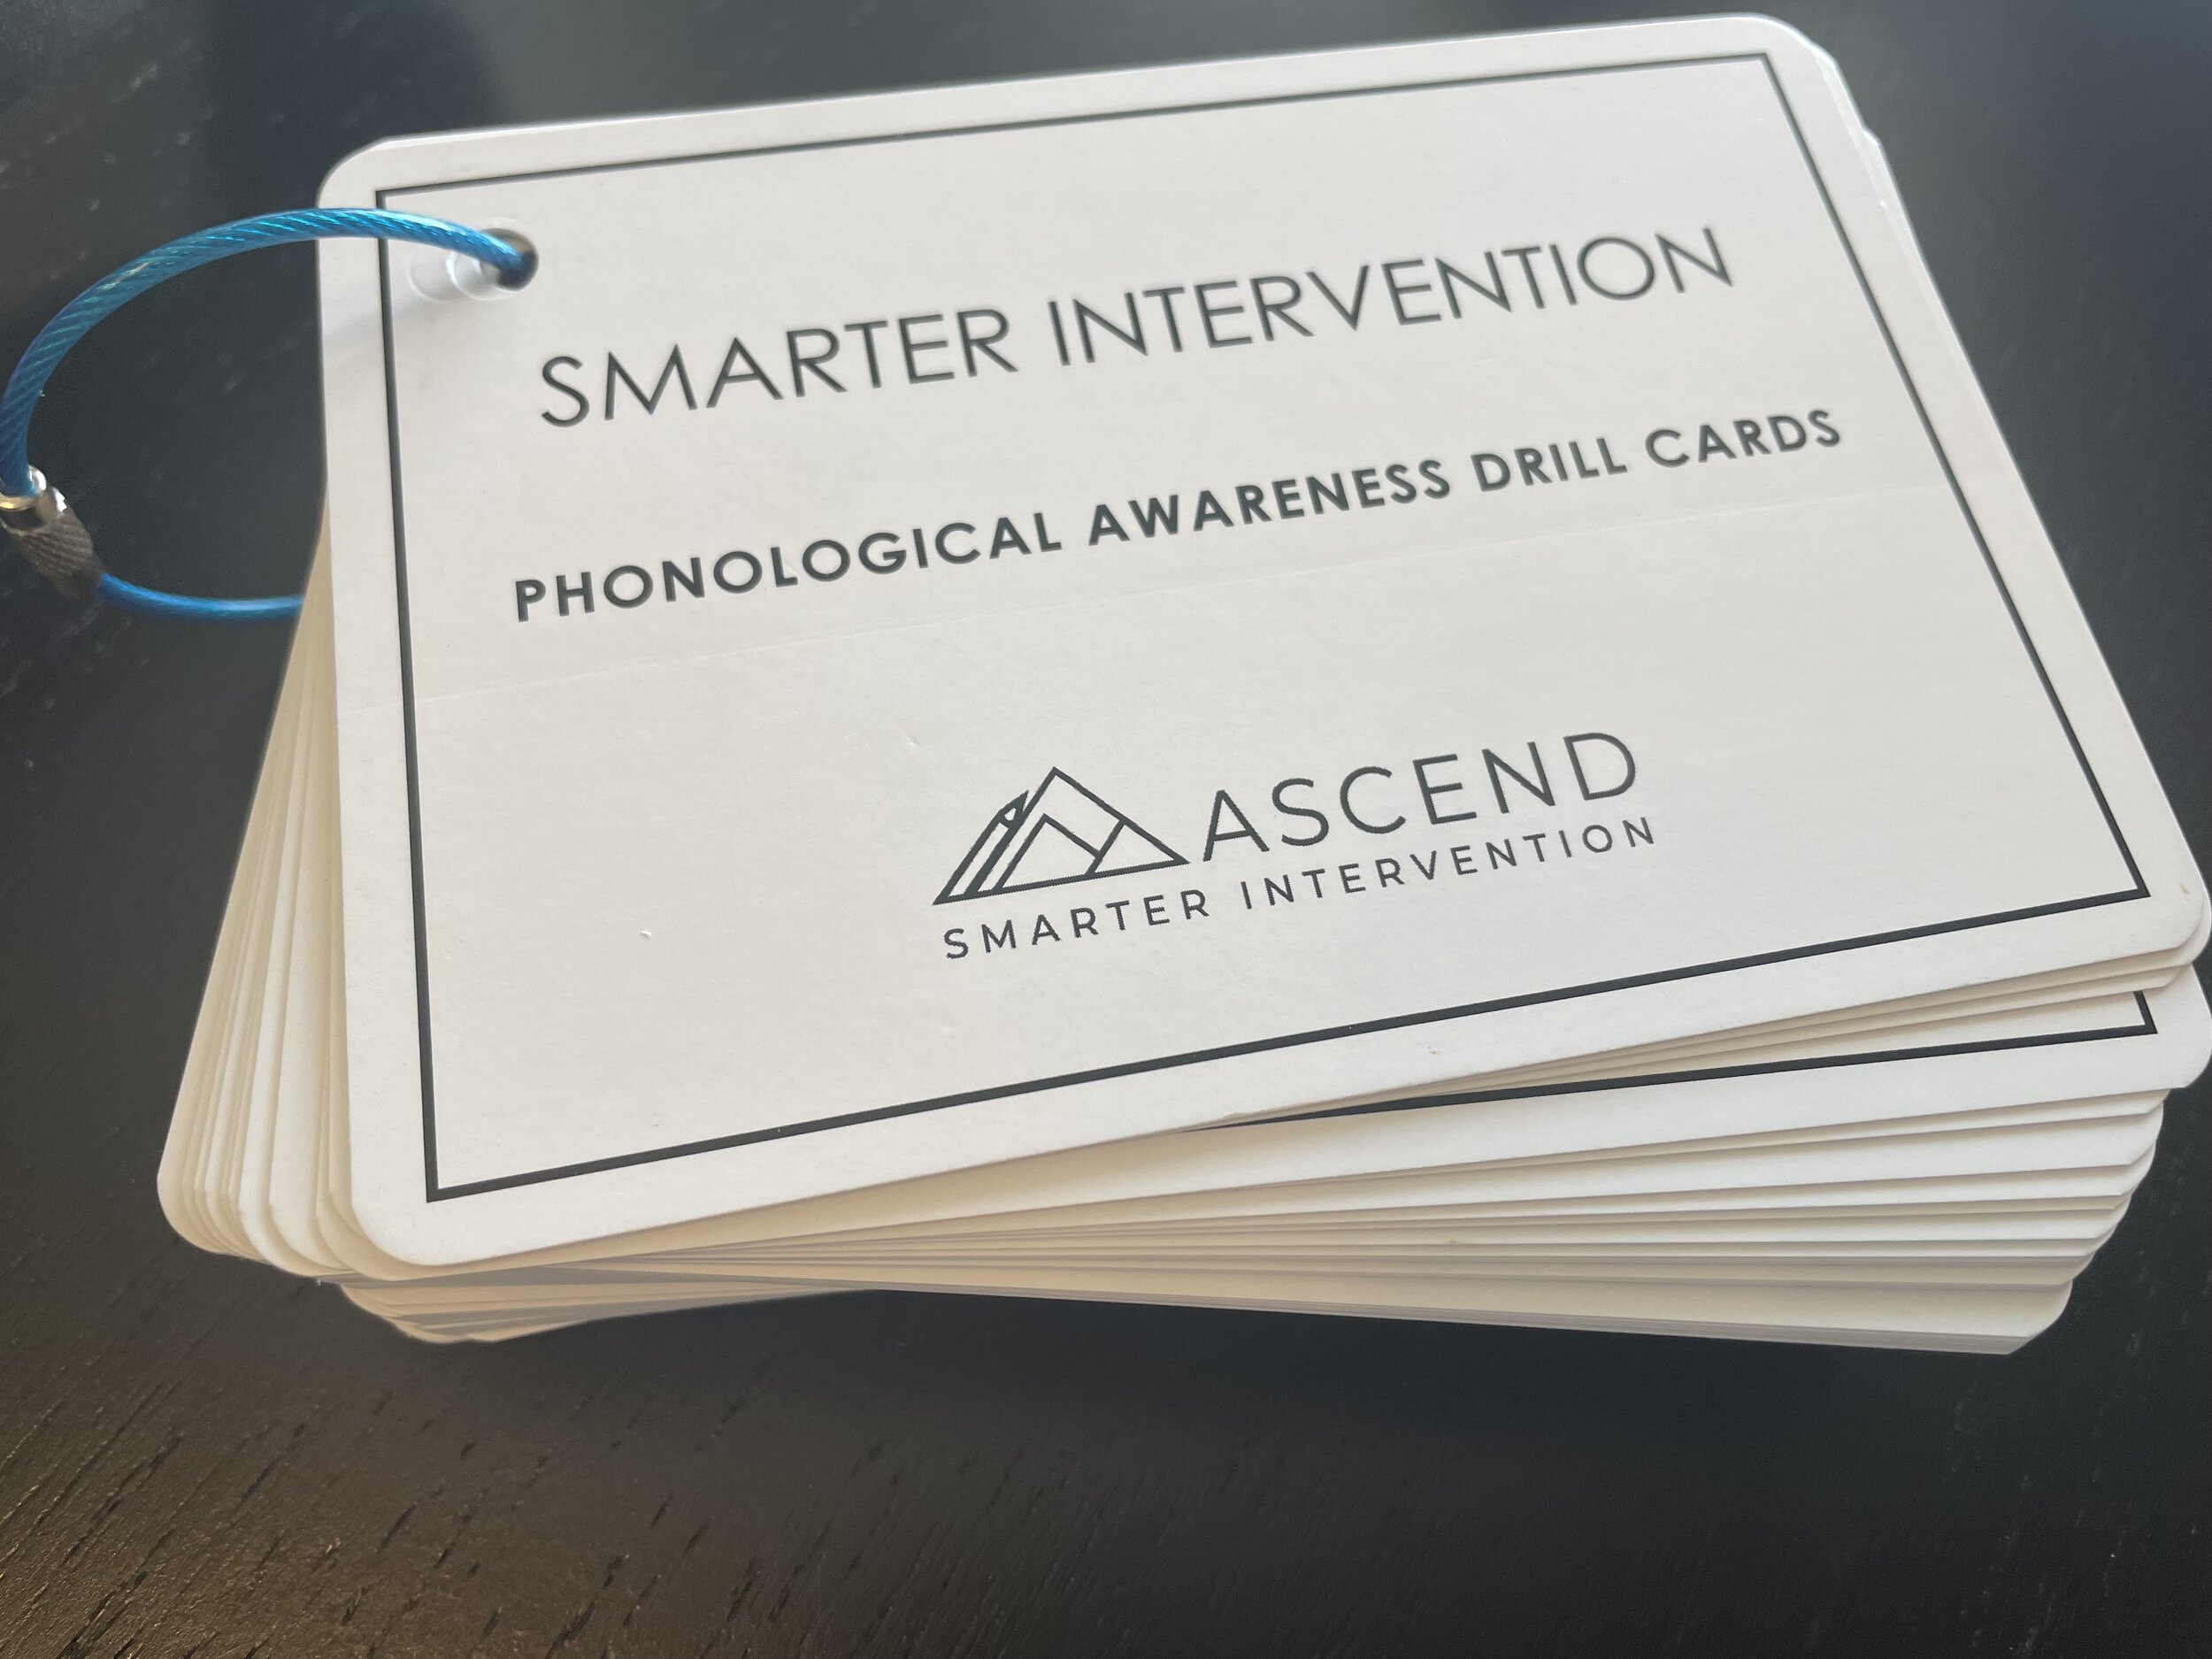 Phonological Awareness Drill Cards (1).jpg